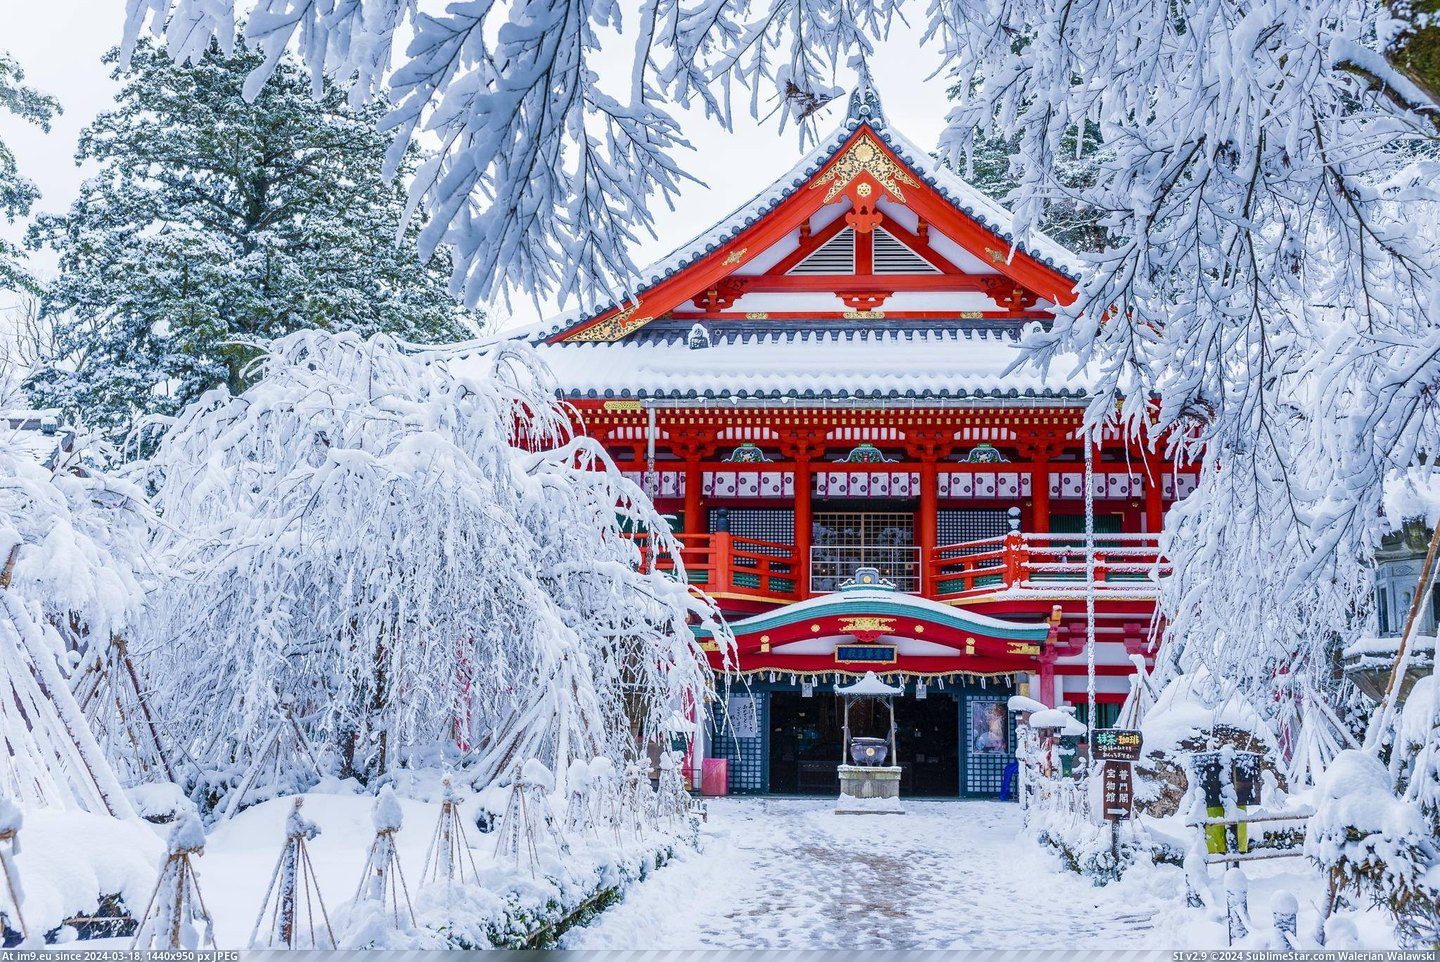 #Winter #Temple #Natadera #Japan [Pics] Natadera Temple in winter, Japan Pic. (Image of album My r/PICS favs))